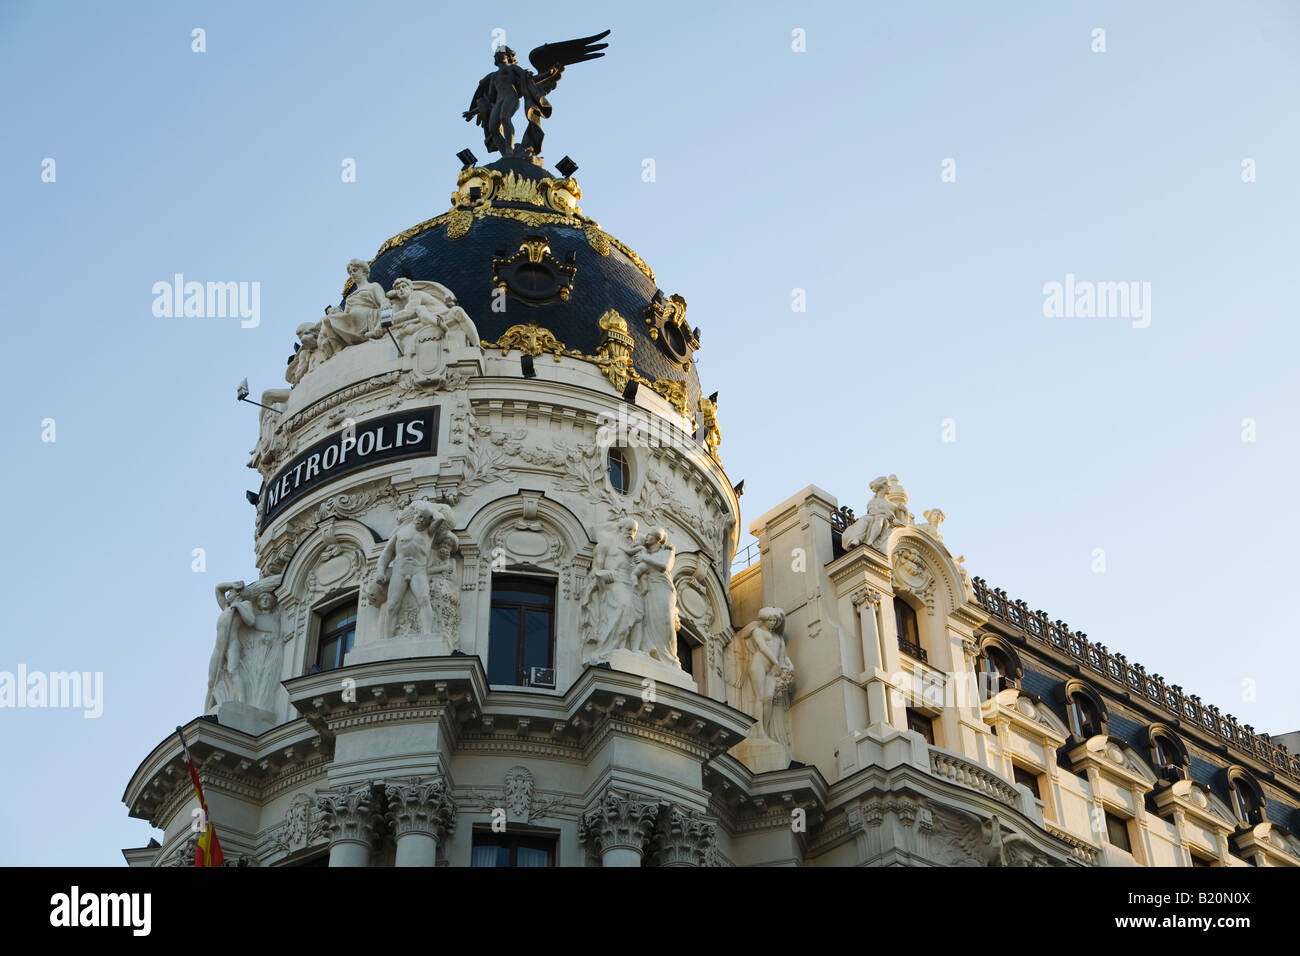 SPAIN Madrid Winged statue atop Metropolis building on Gran Via street Stock Photo